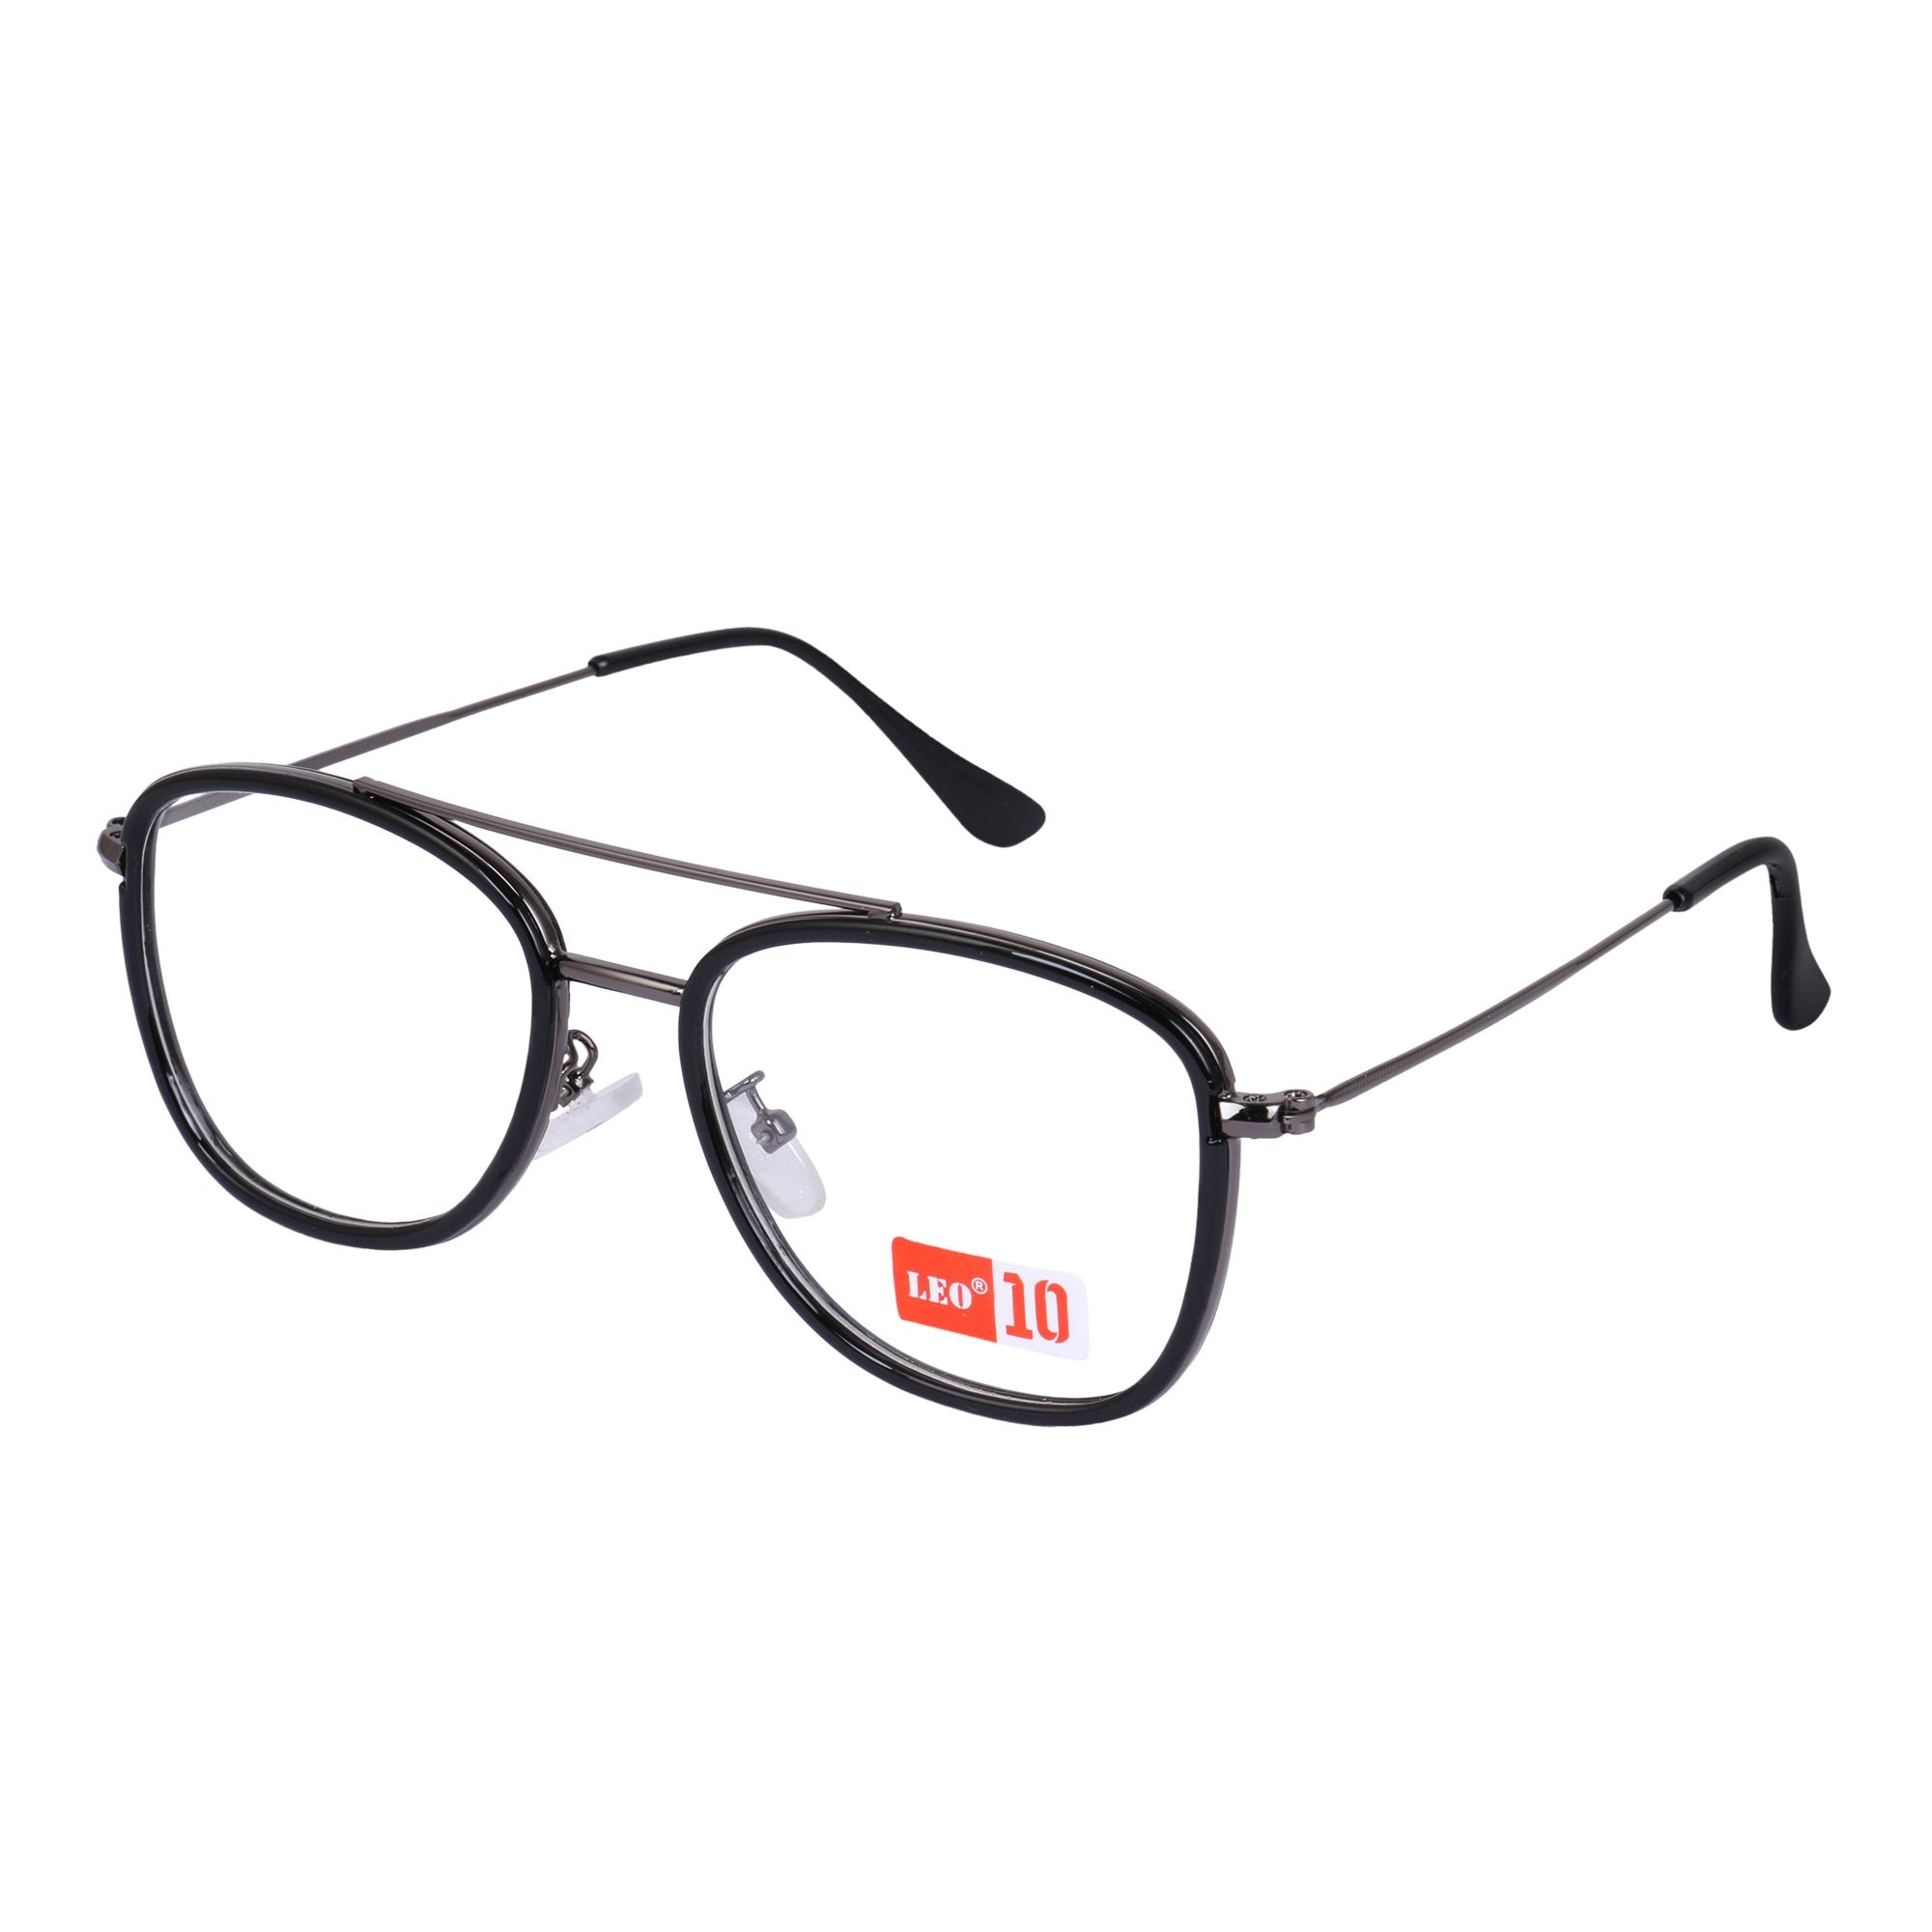 Grey Square Metal Eyeglasses - L98027